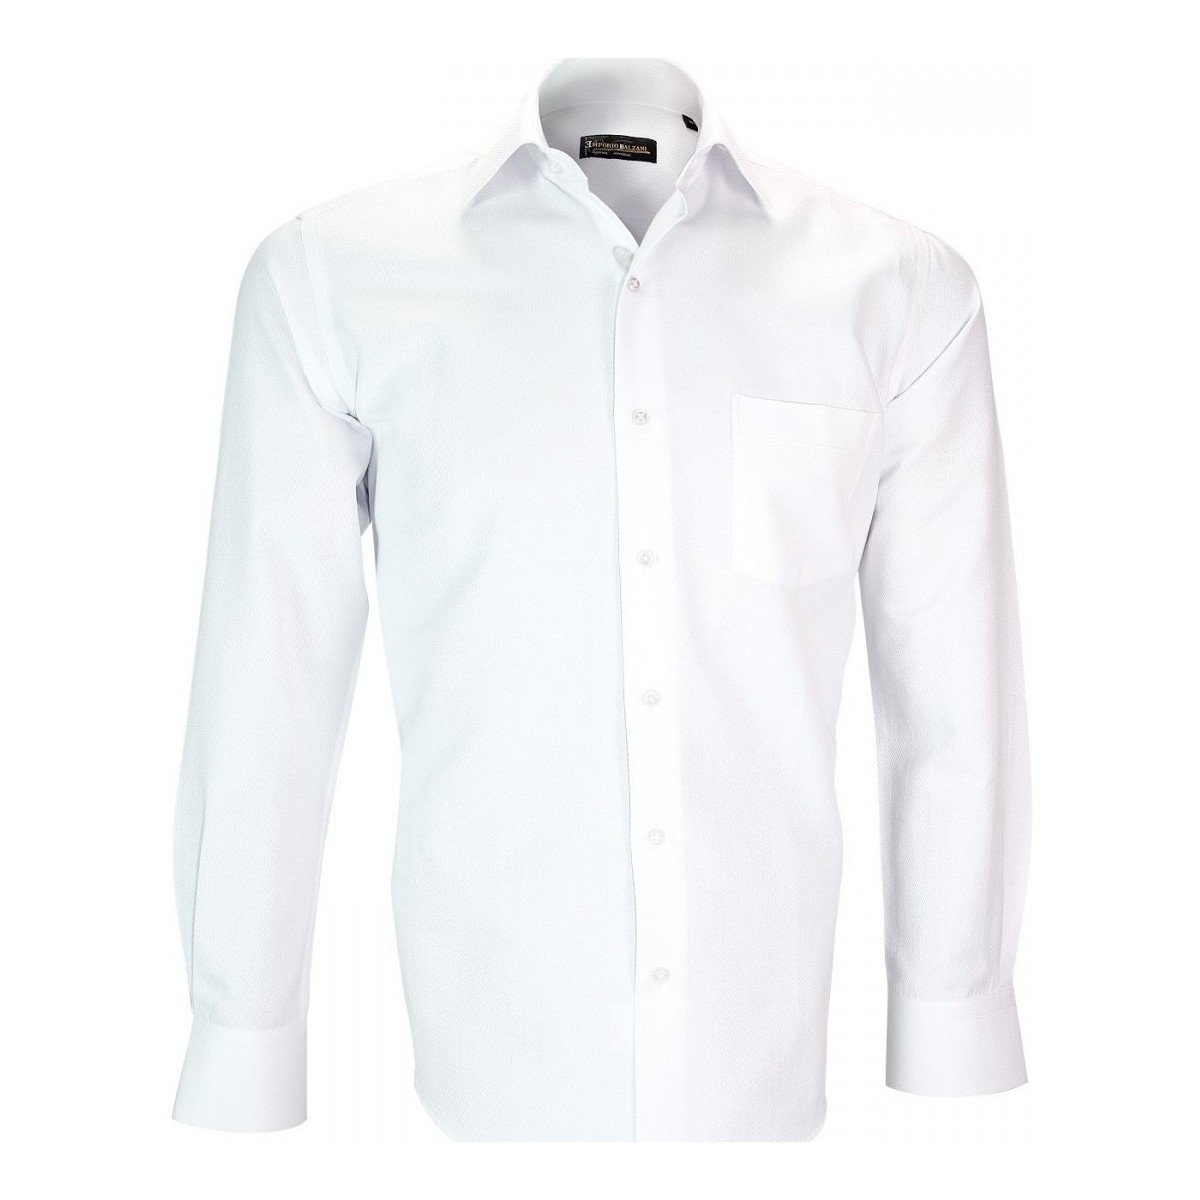 Vêtements Homme Chemises manches longues Emporio Balzani chemise tissu jacquard syracuse blanc Blanc